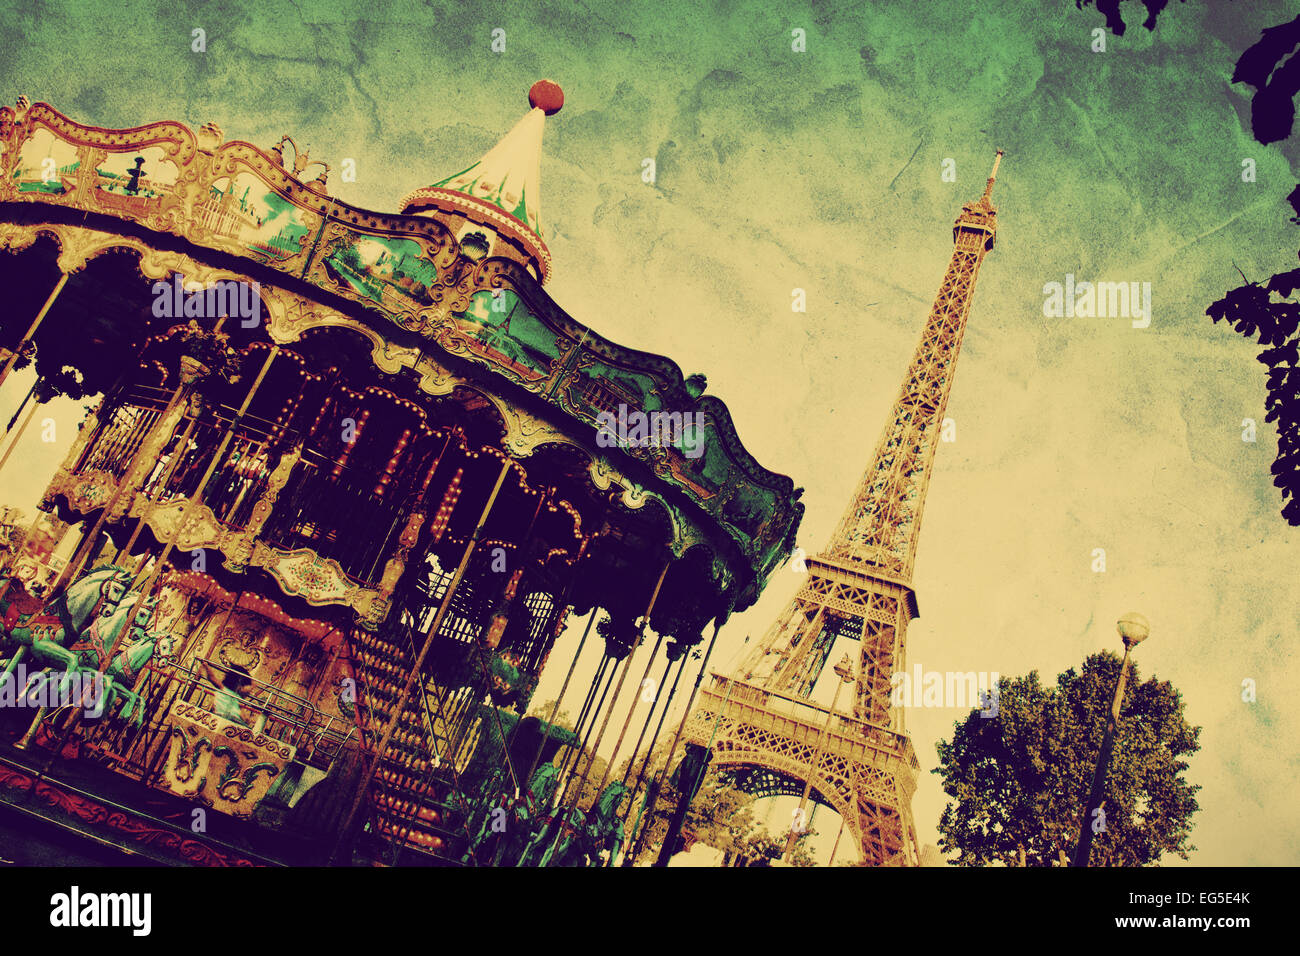 Eiffel Tower and vintage carousel, Paris, France. Retro style Stock Photo